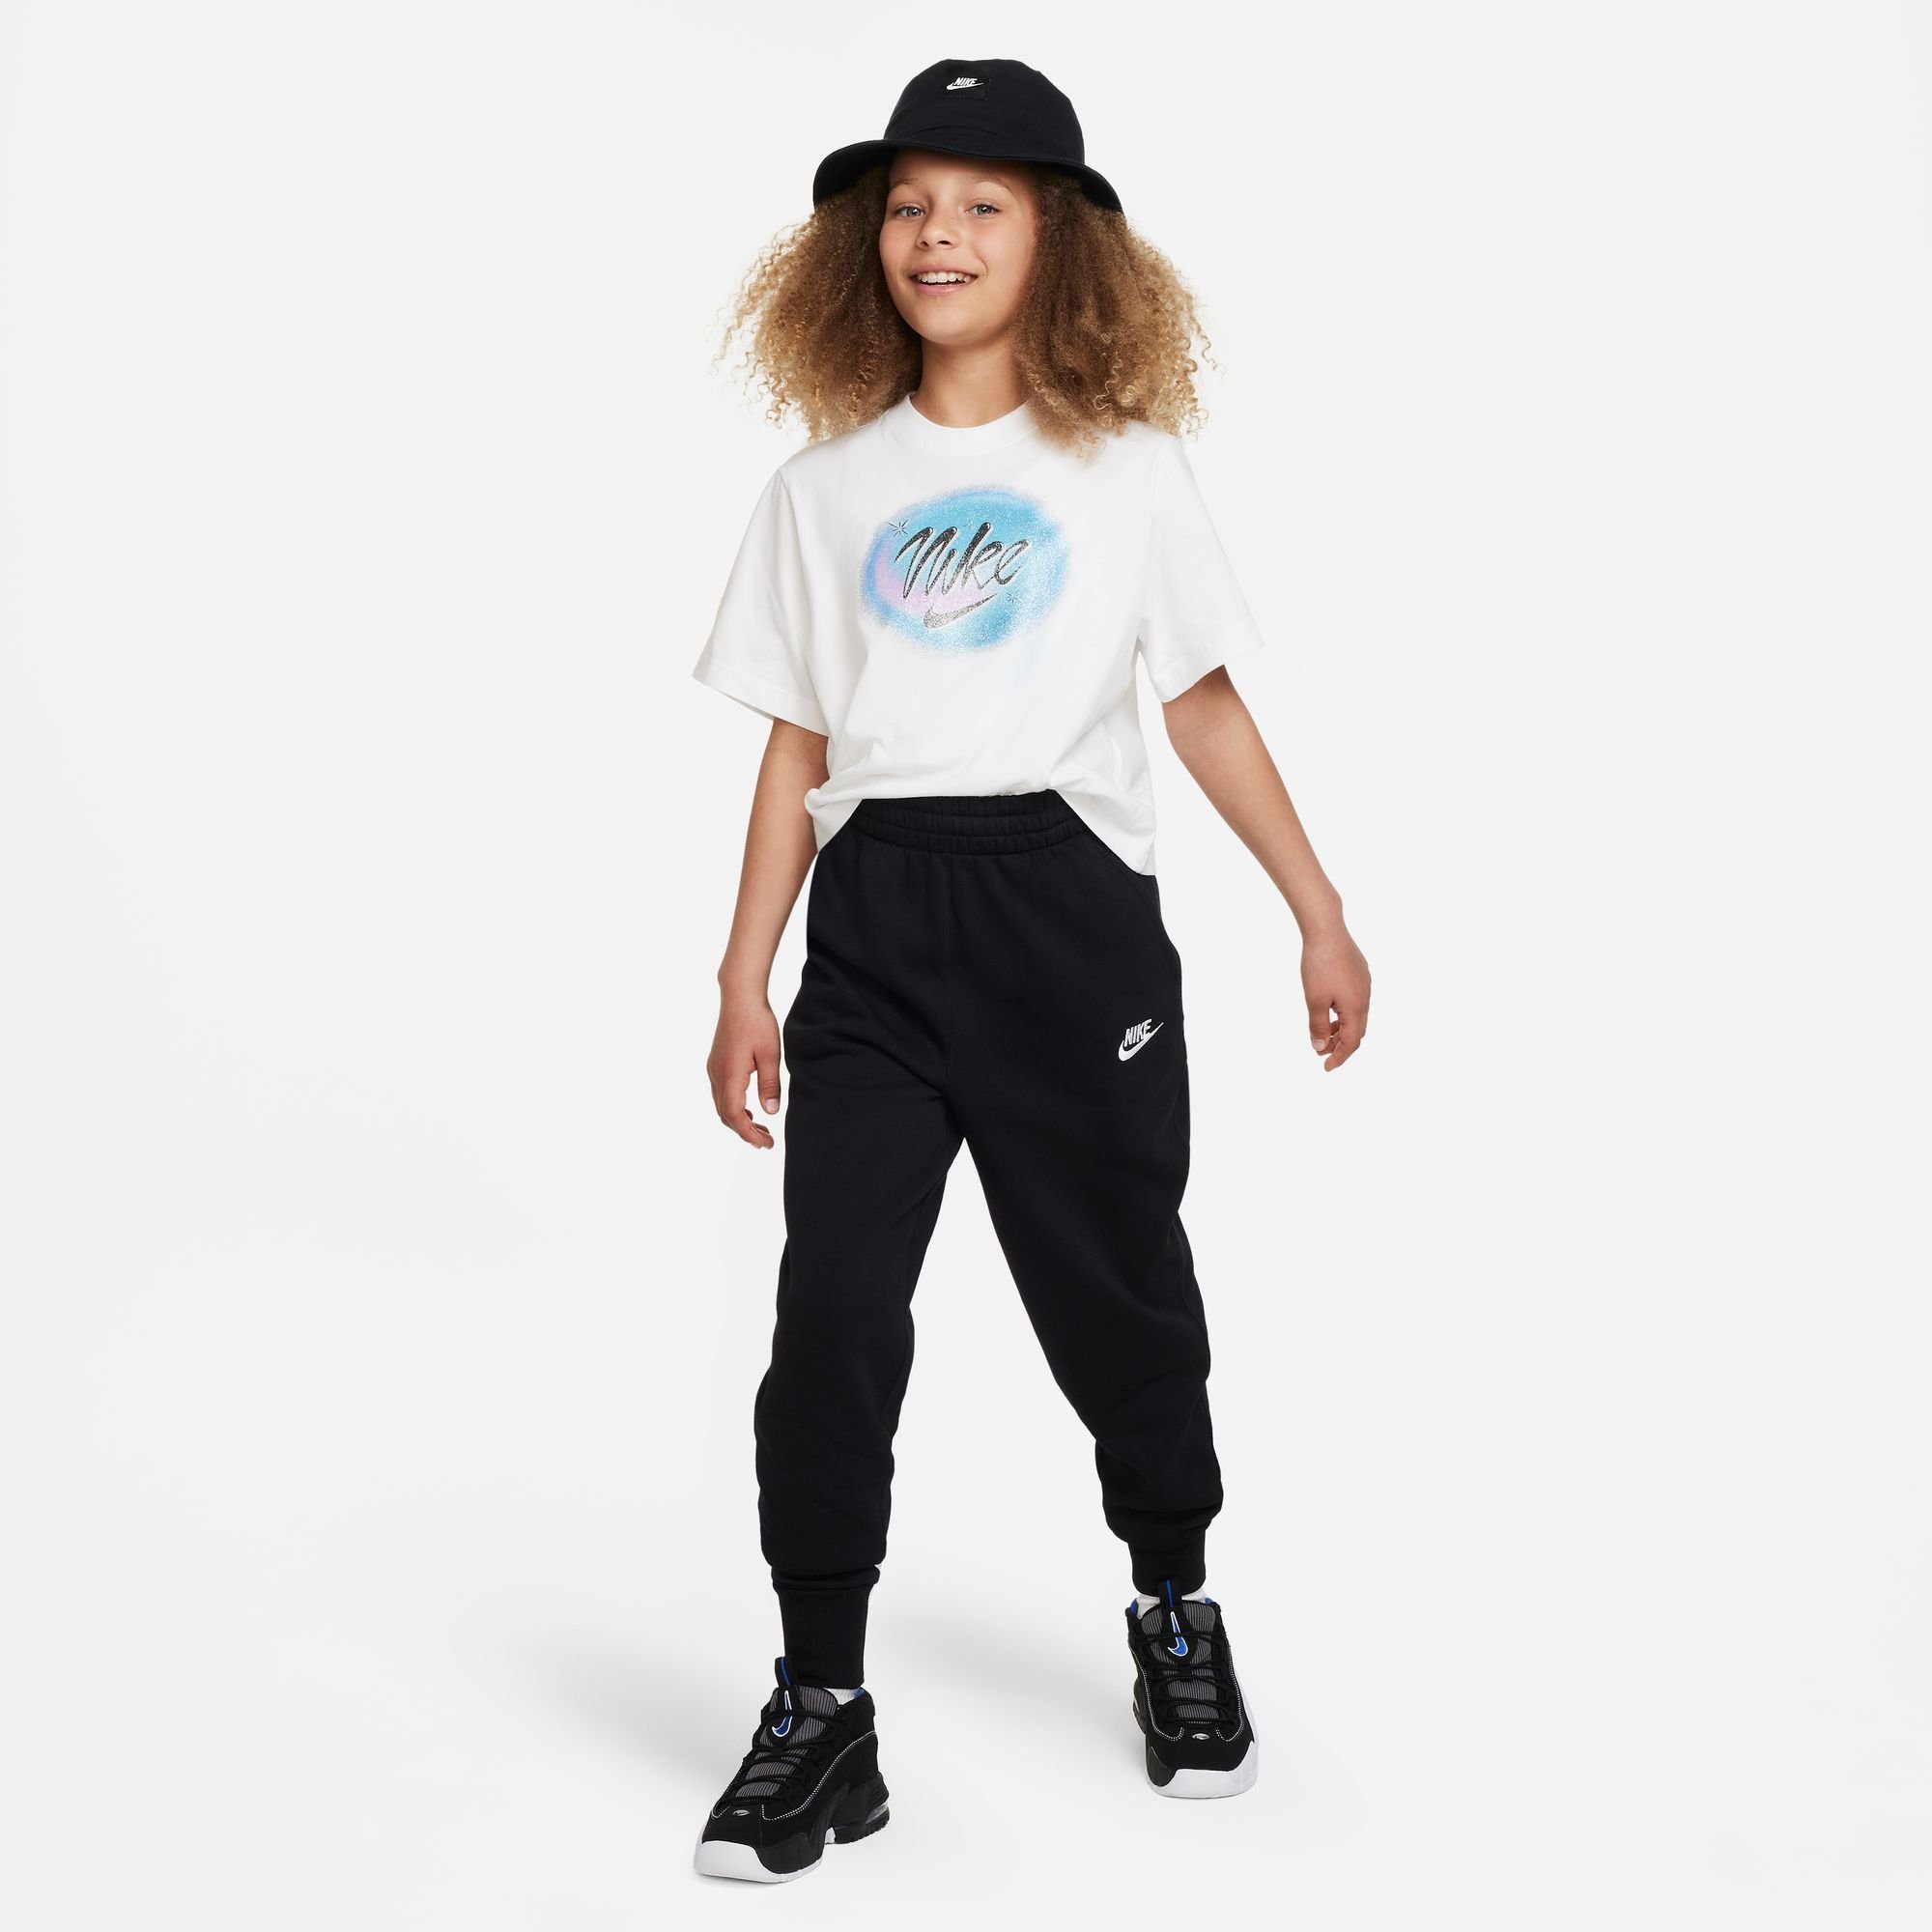 HIGH-WAISTED PANTS Jogginghose KIDS' FLEECE CLUB Sportswear FITTED BIG Nike (GIRLS) BLACK/BLACK/WHITE